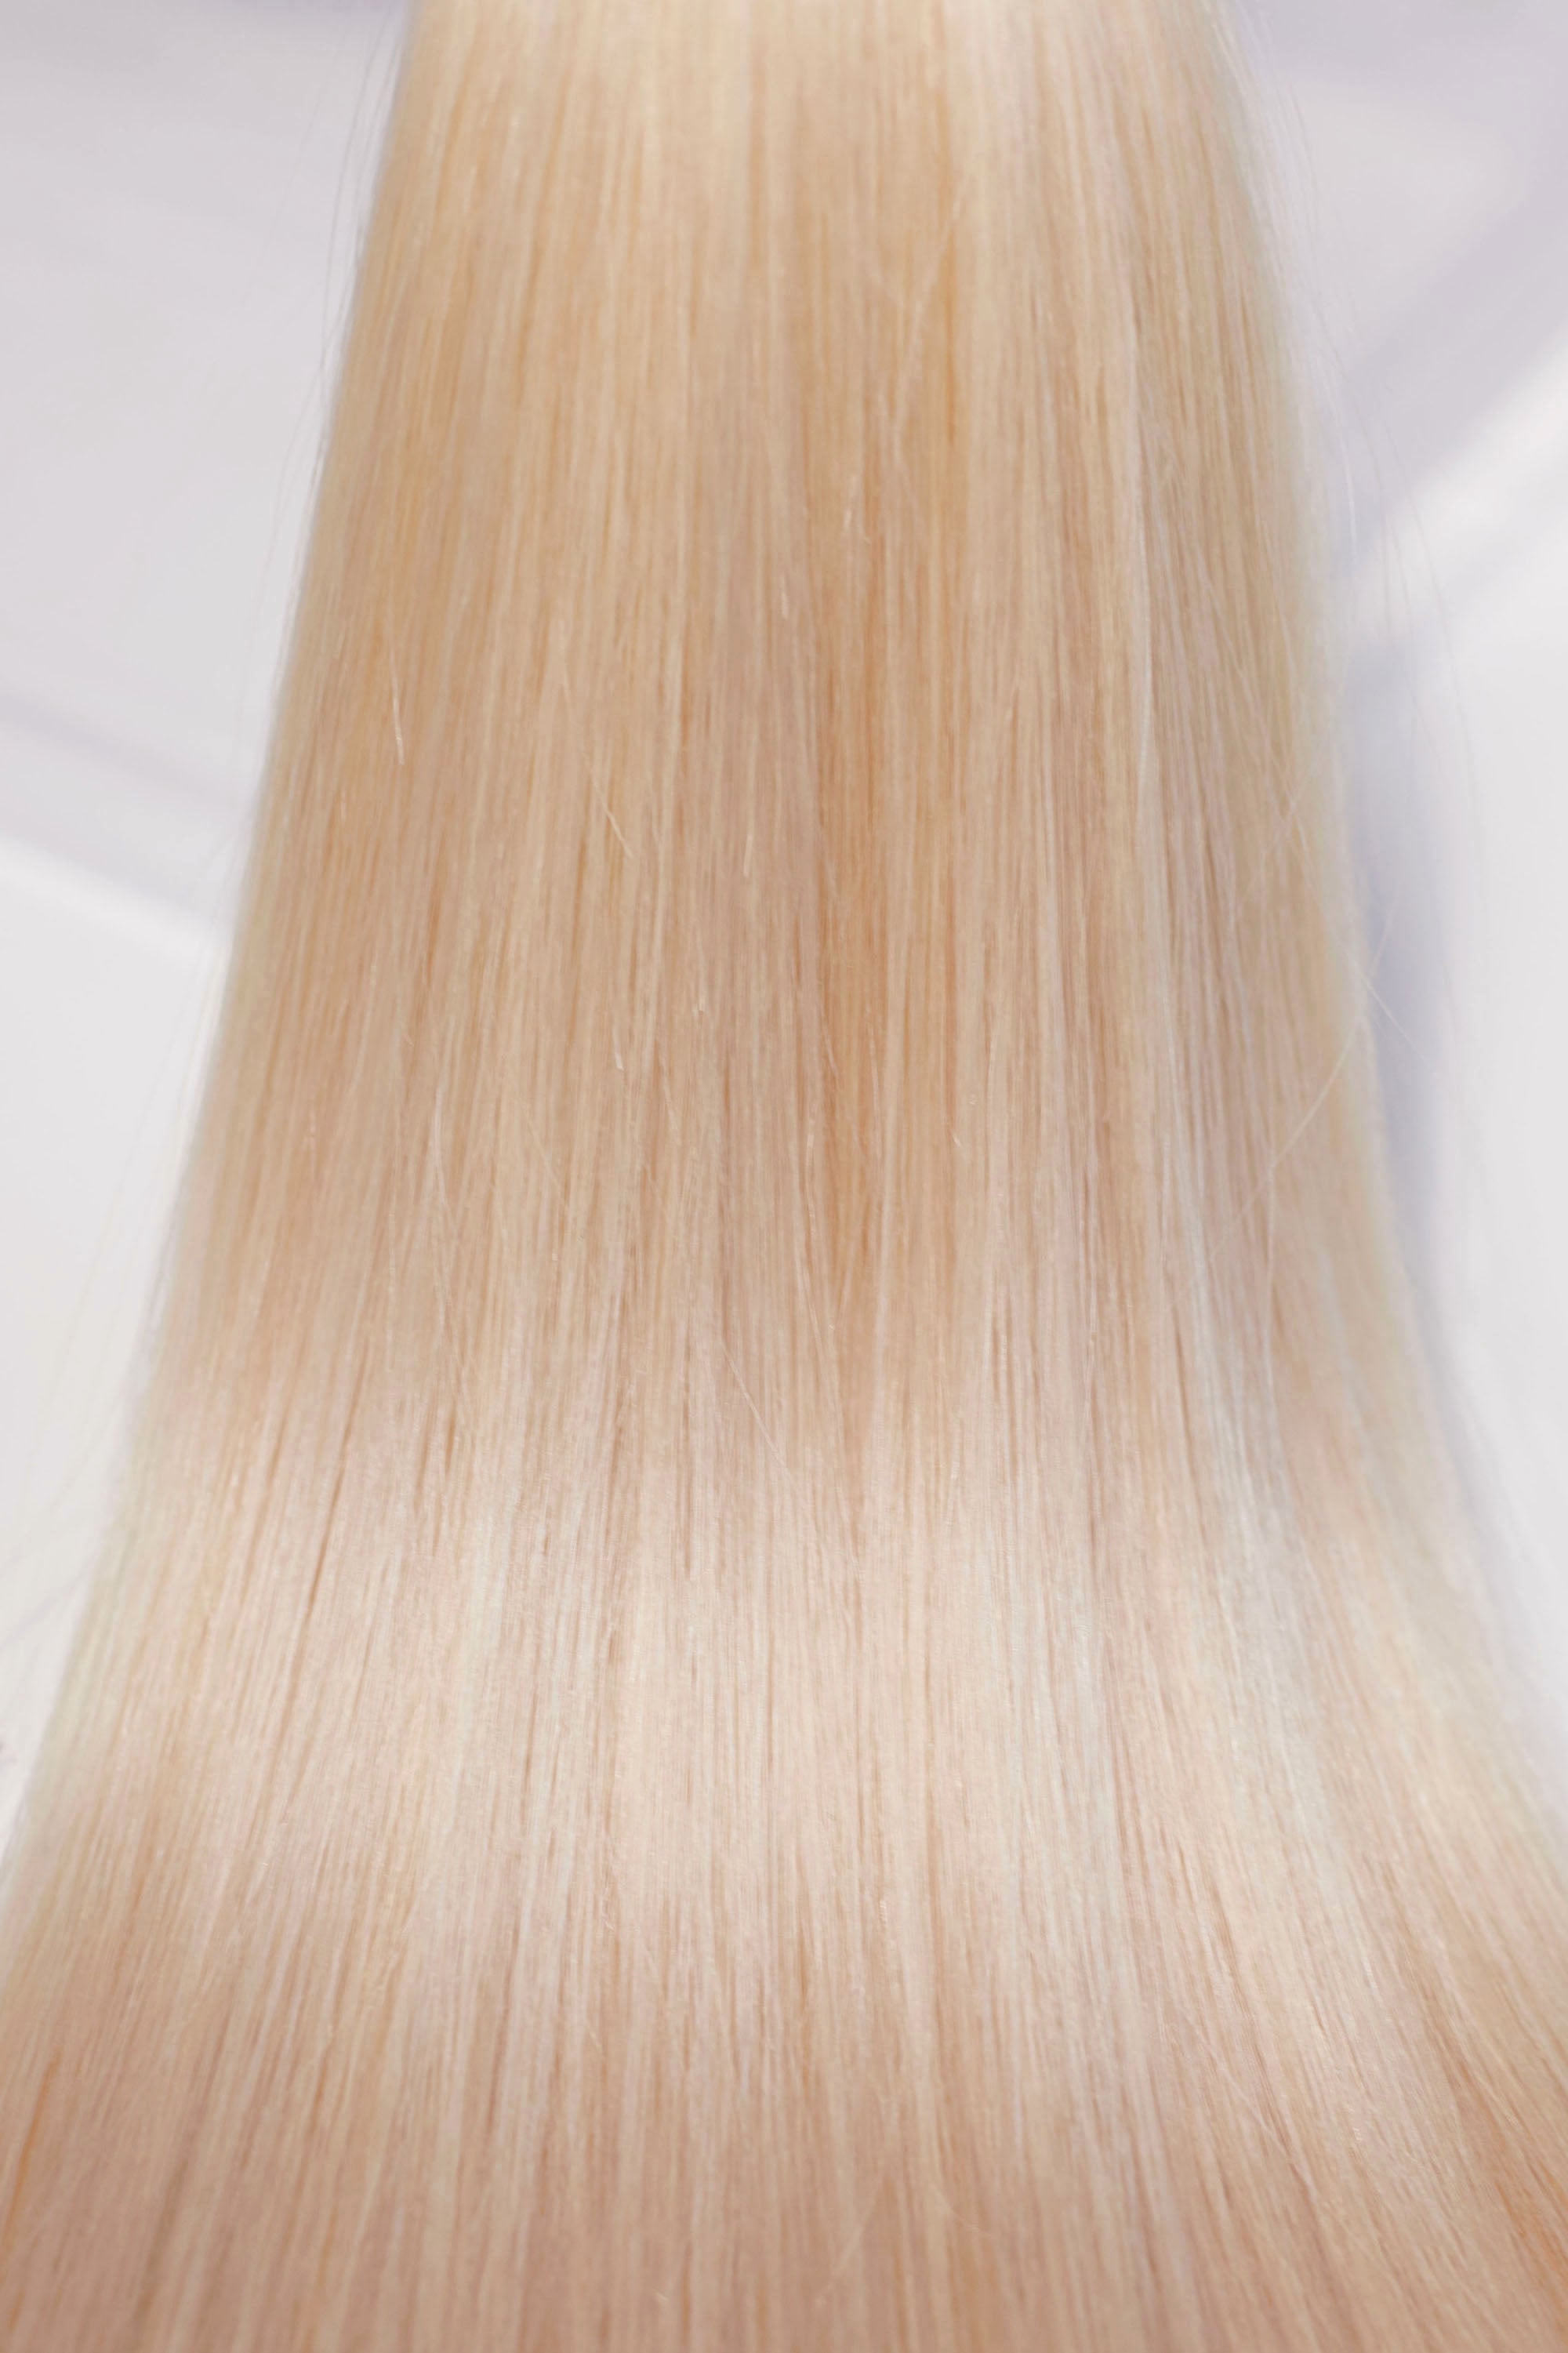 Behair professional Keratin Tip "Premium" 22" (55cm) Natural Straight Platinum Blond #60 - 25g (Micro - 0.5g each pcs) hair extensions